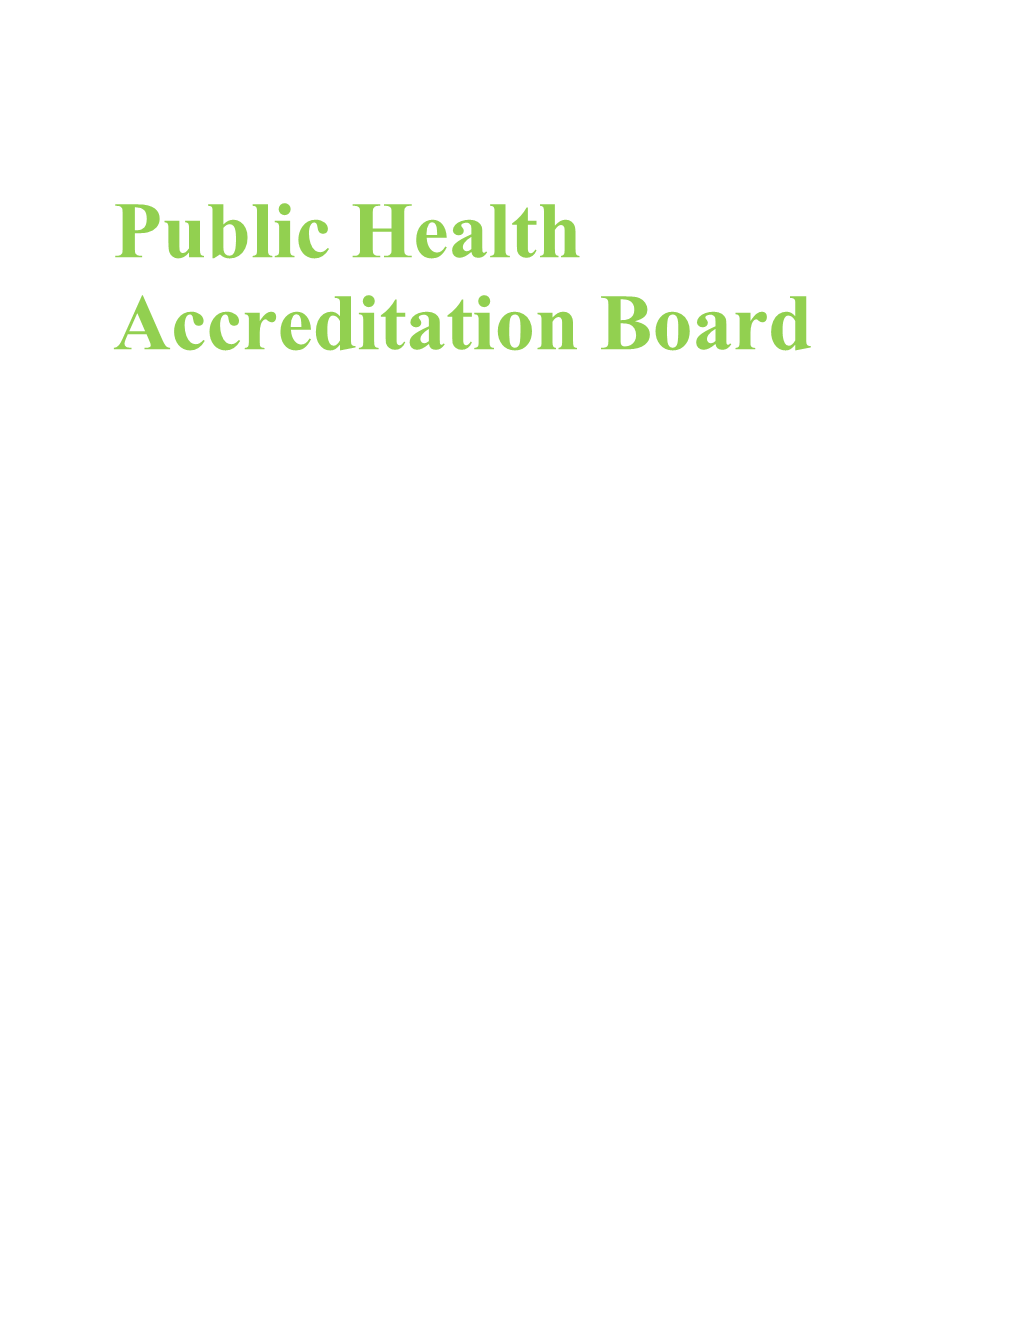 Accreditation Board